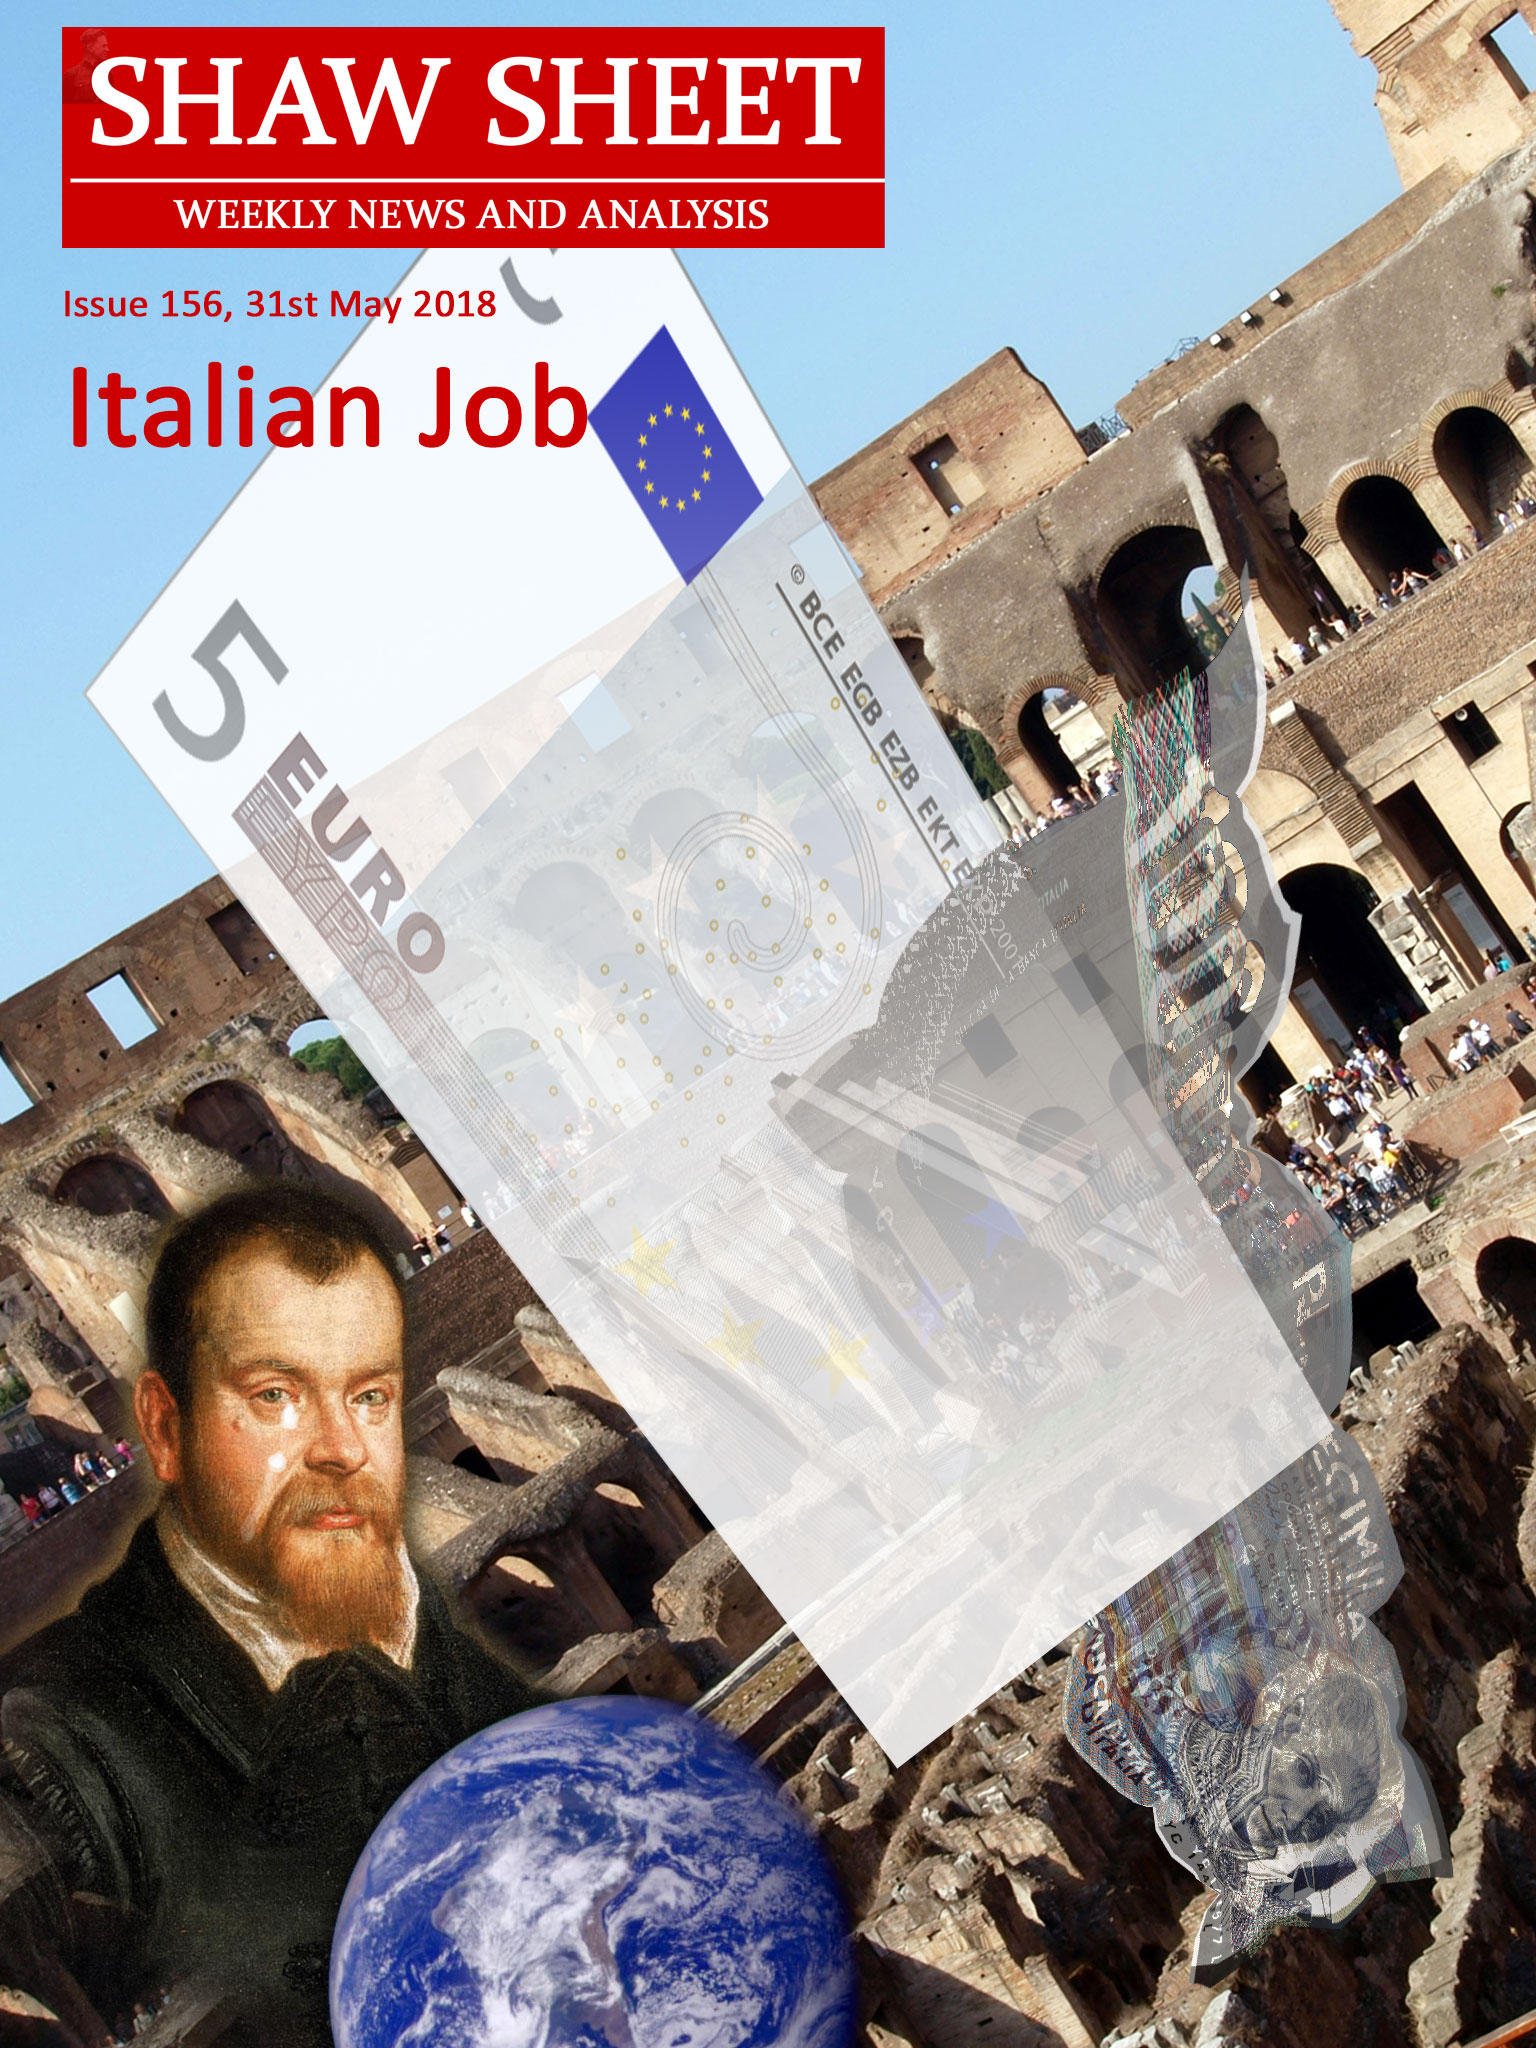 Cover Image 156 Italian Job with Euro Lira fading away and Galileo Galilei shedding a tear over his blue globe